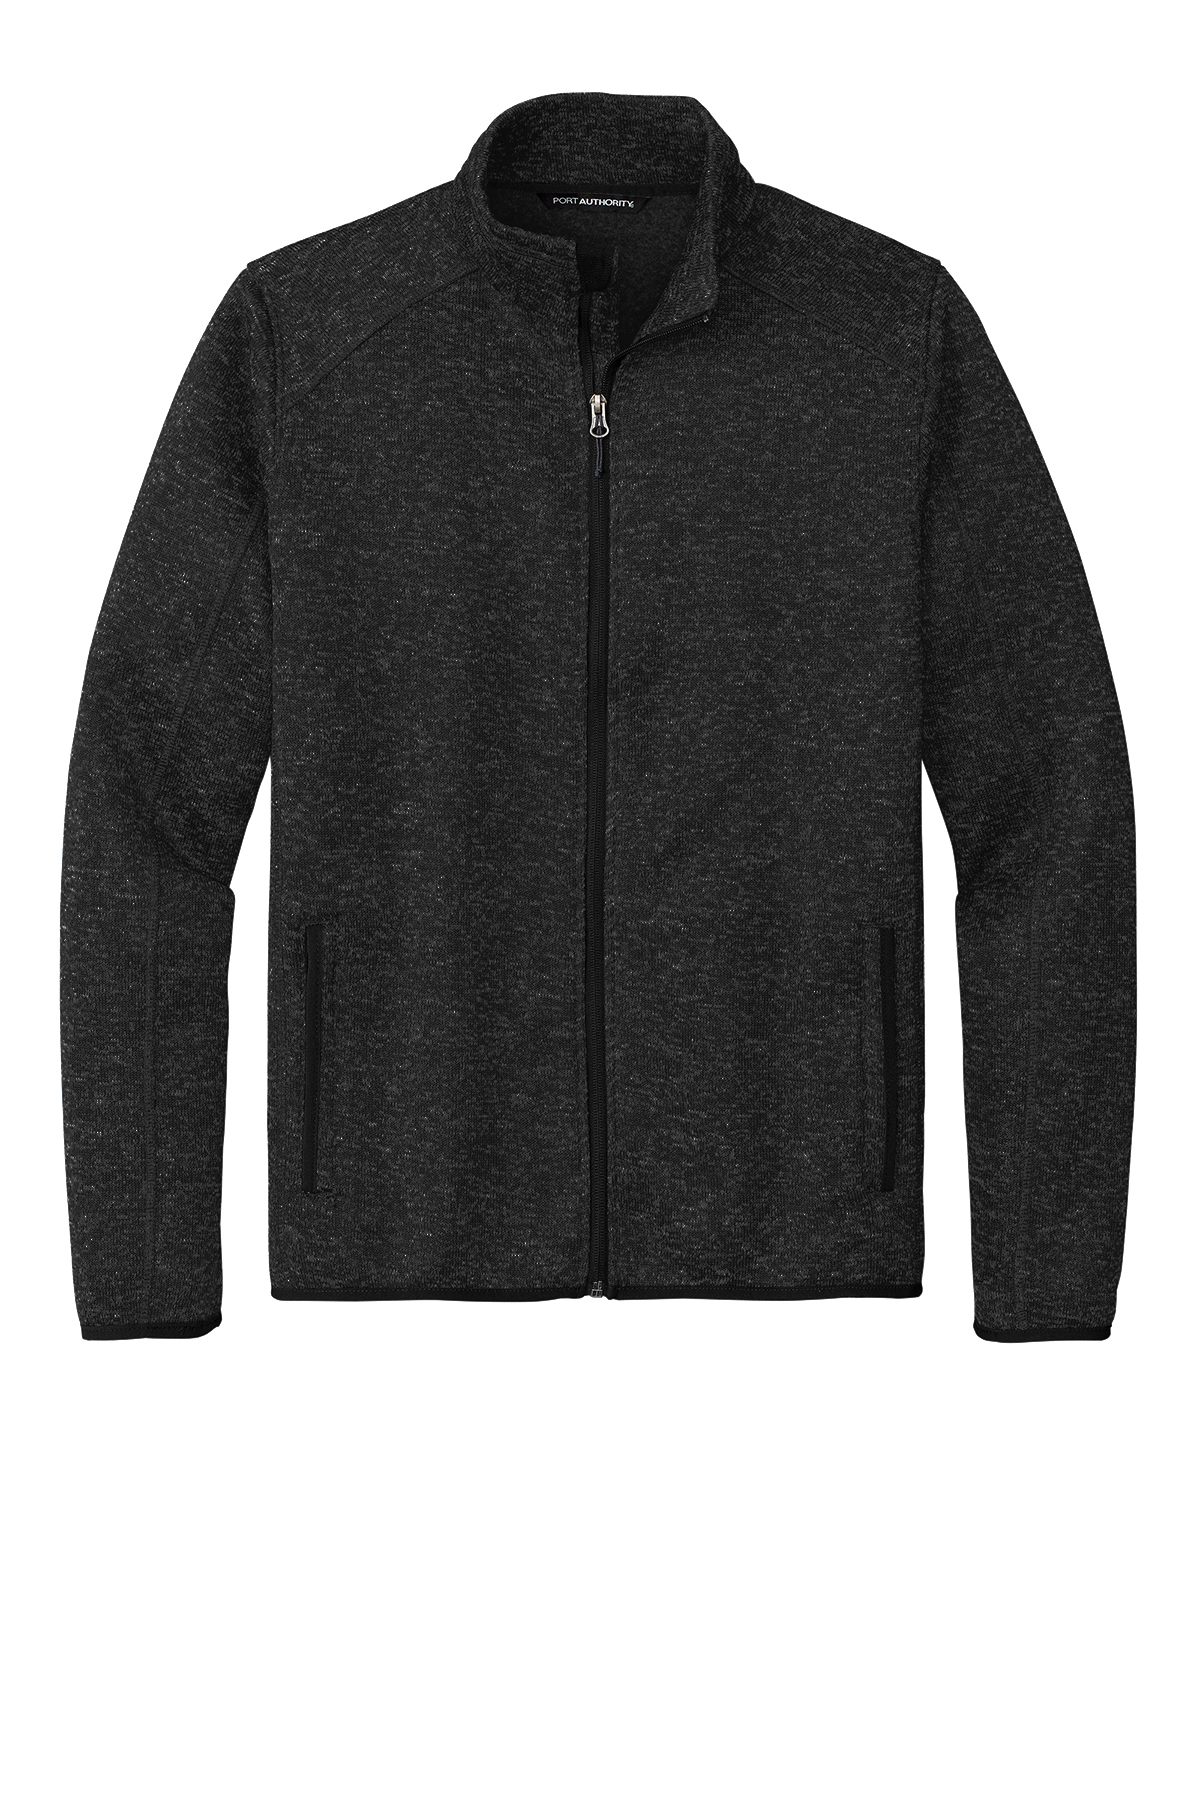 Port Authority Heather MicroFull-Zip Jacket F235 Black Charcoal